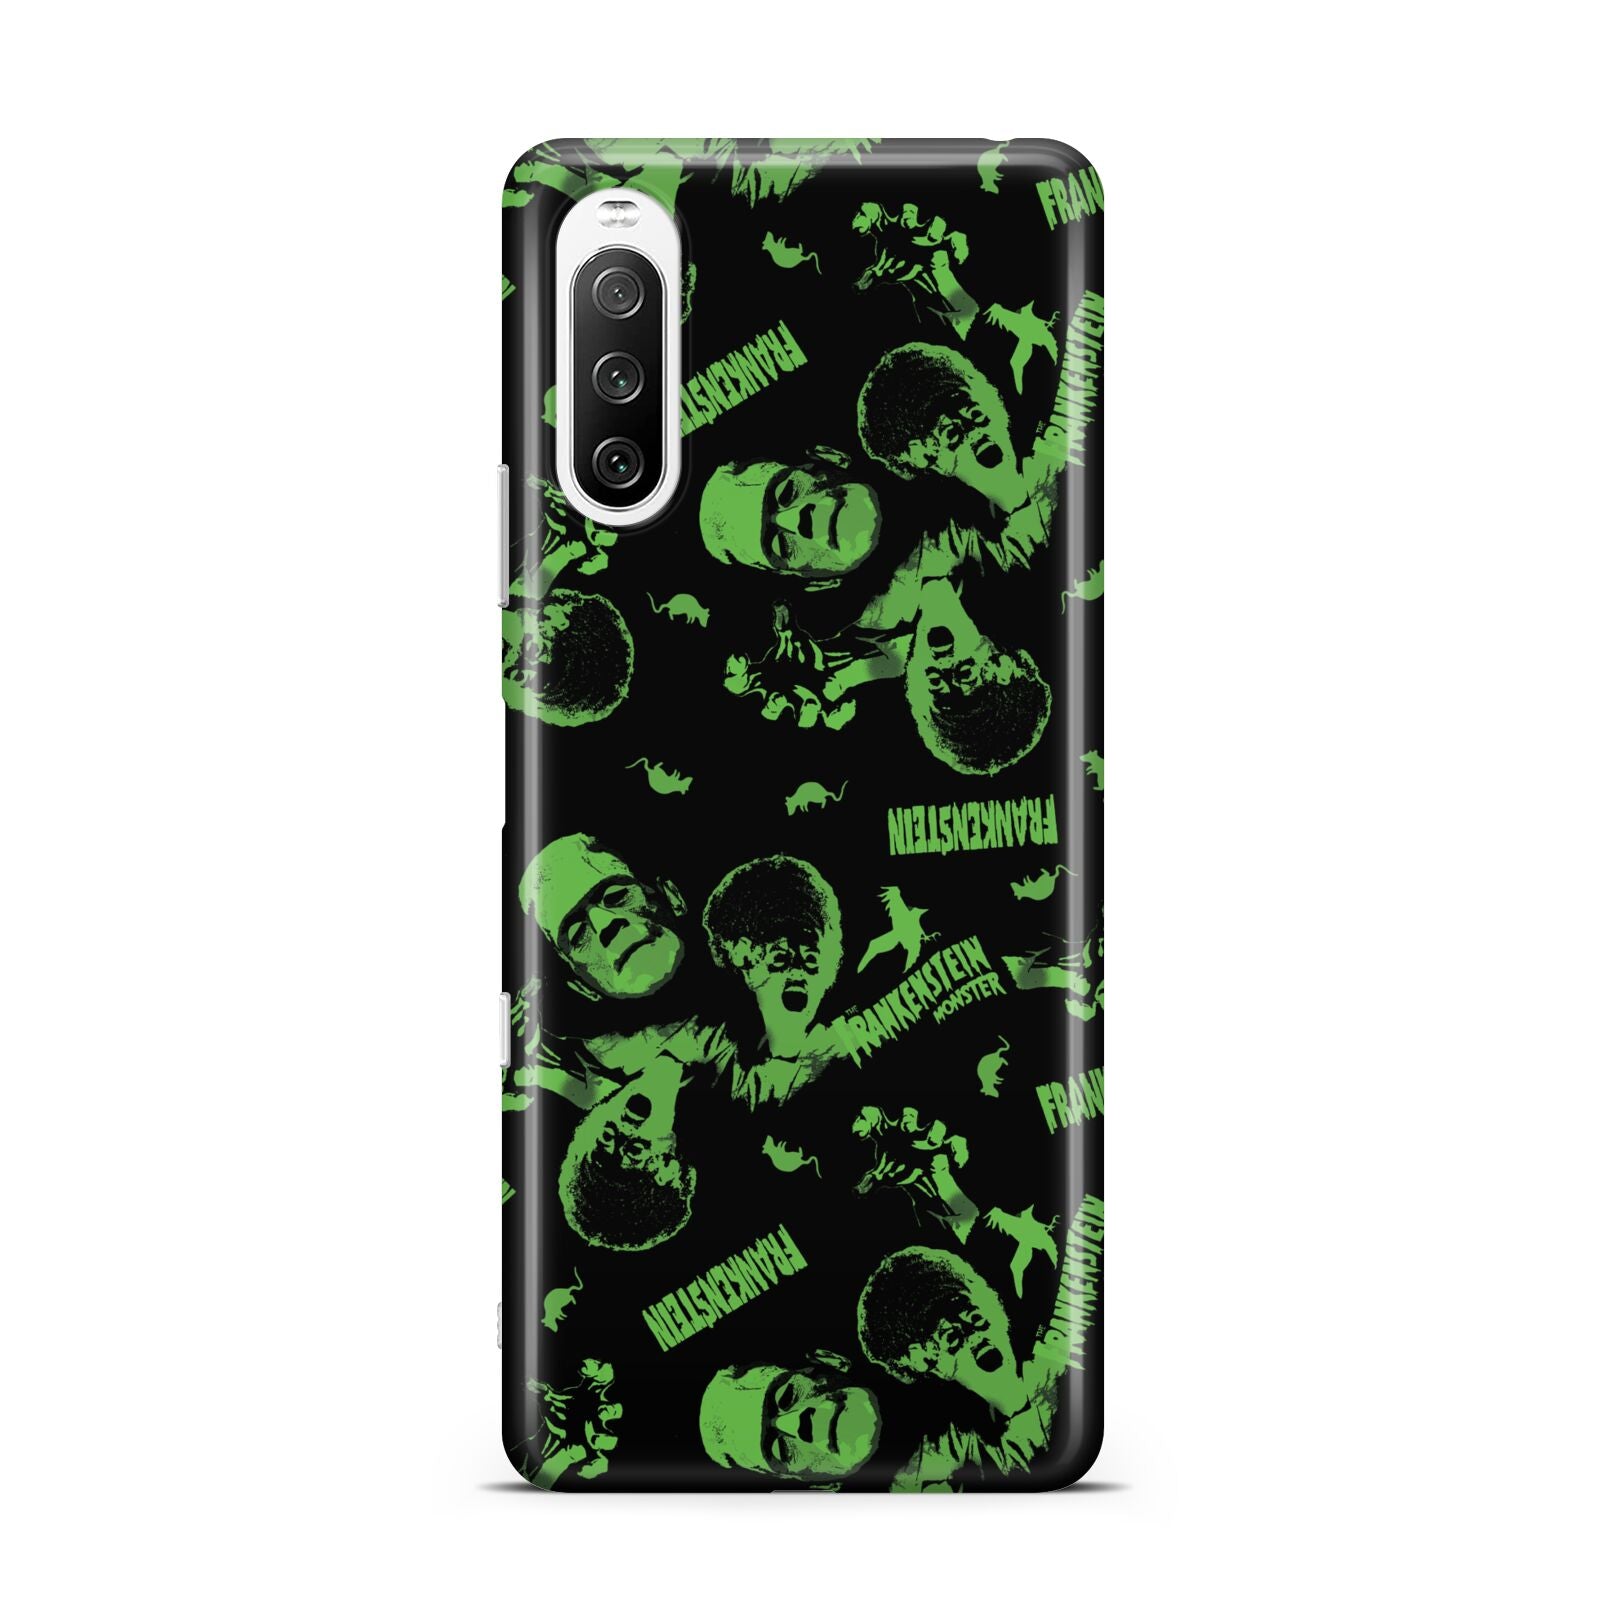 Halloween Monster Sony Xperia 10 III Case